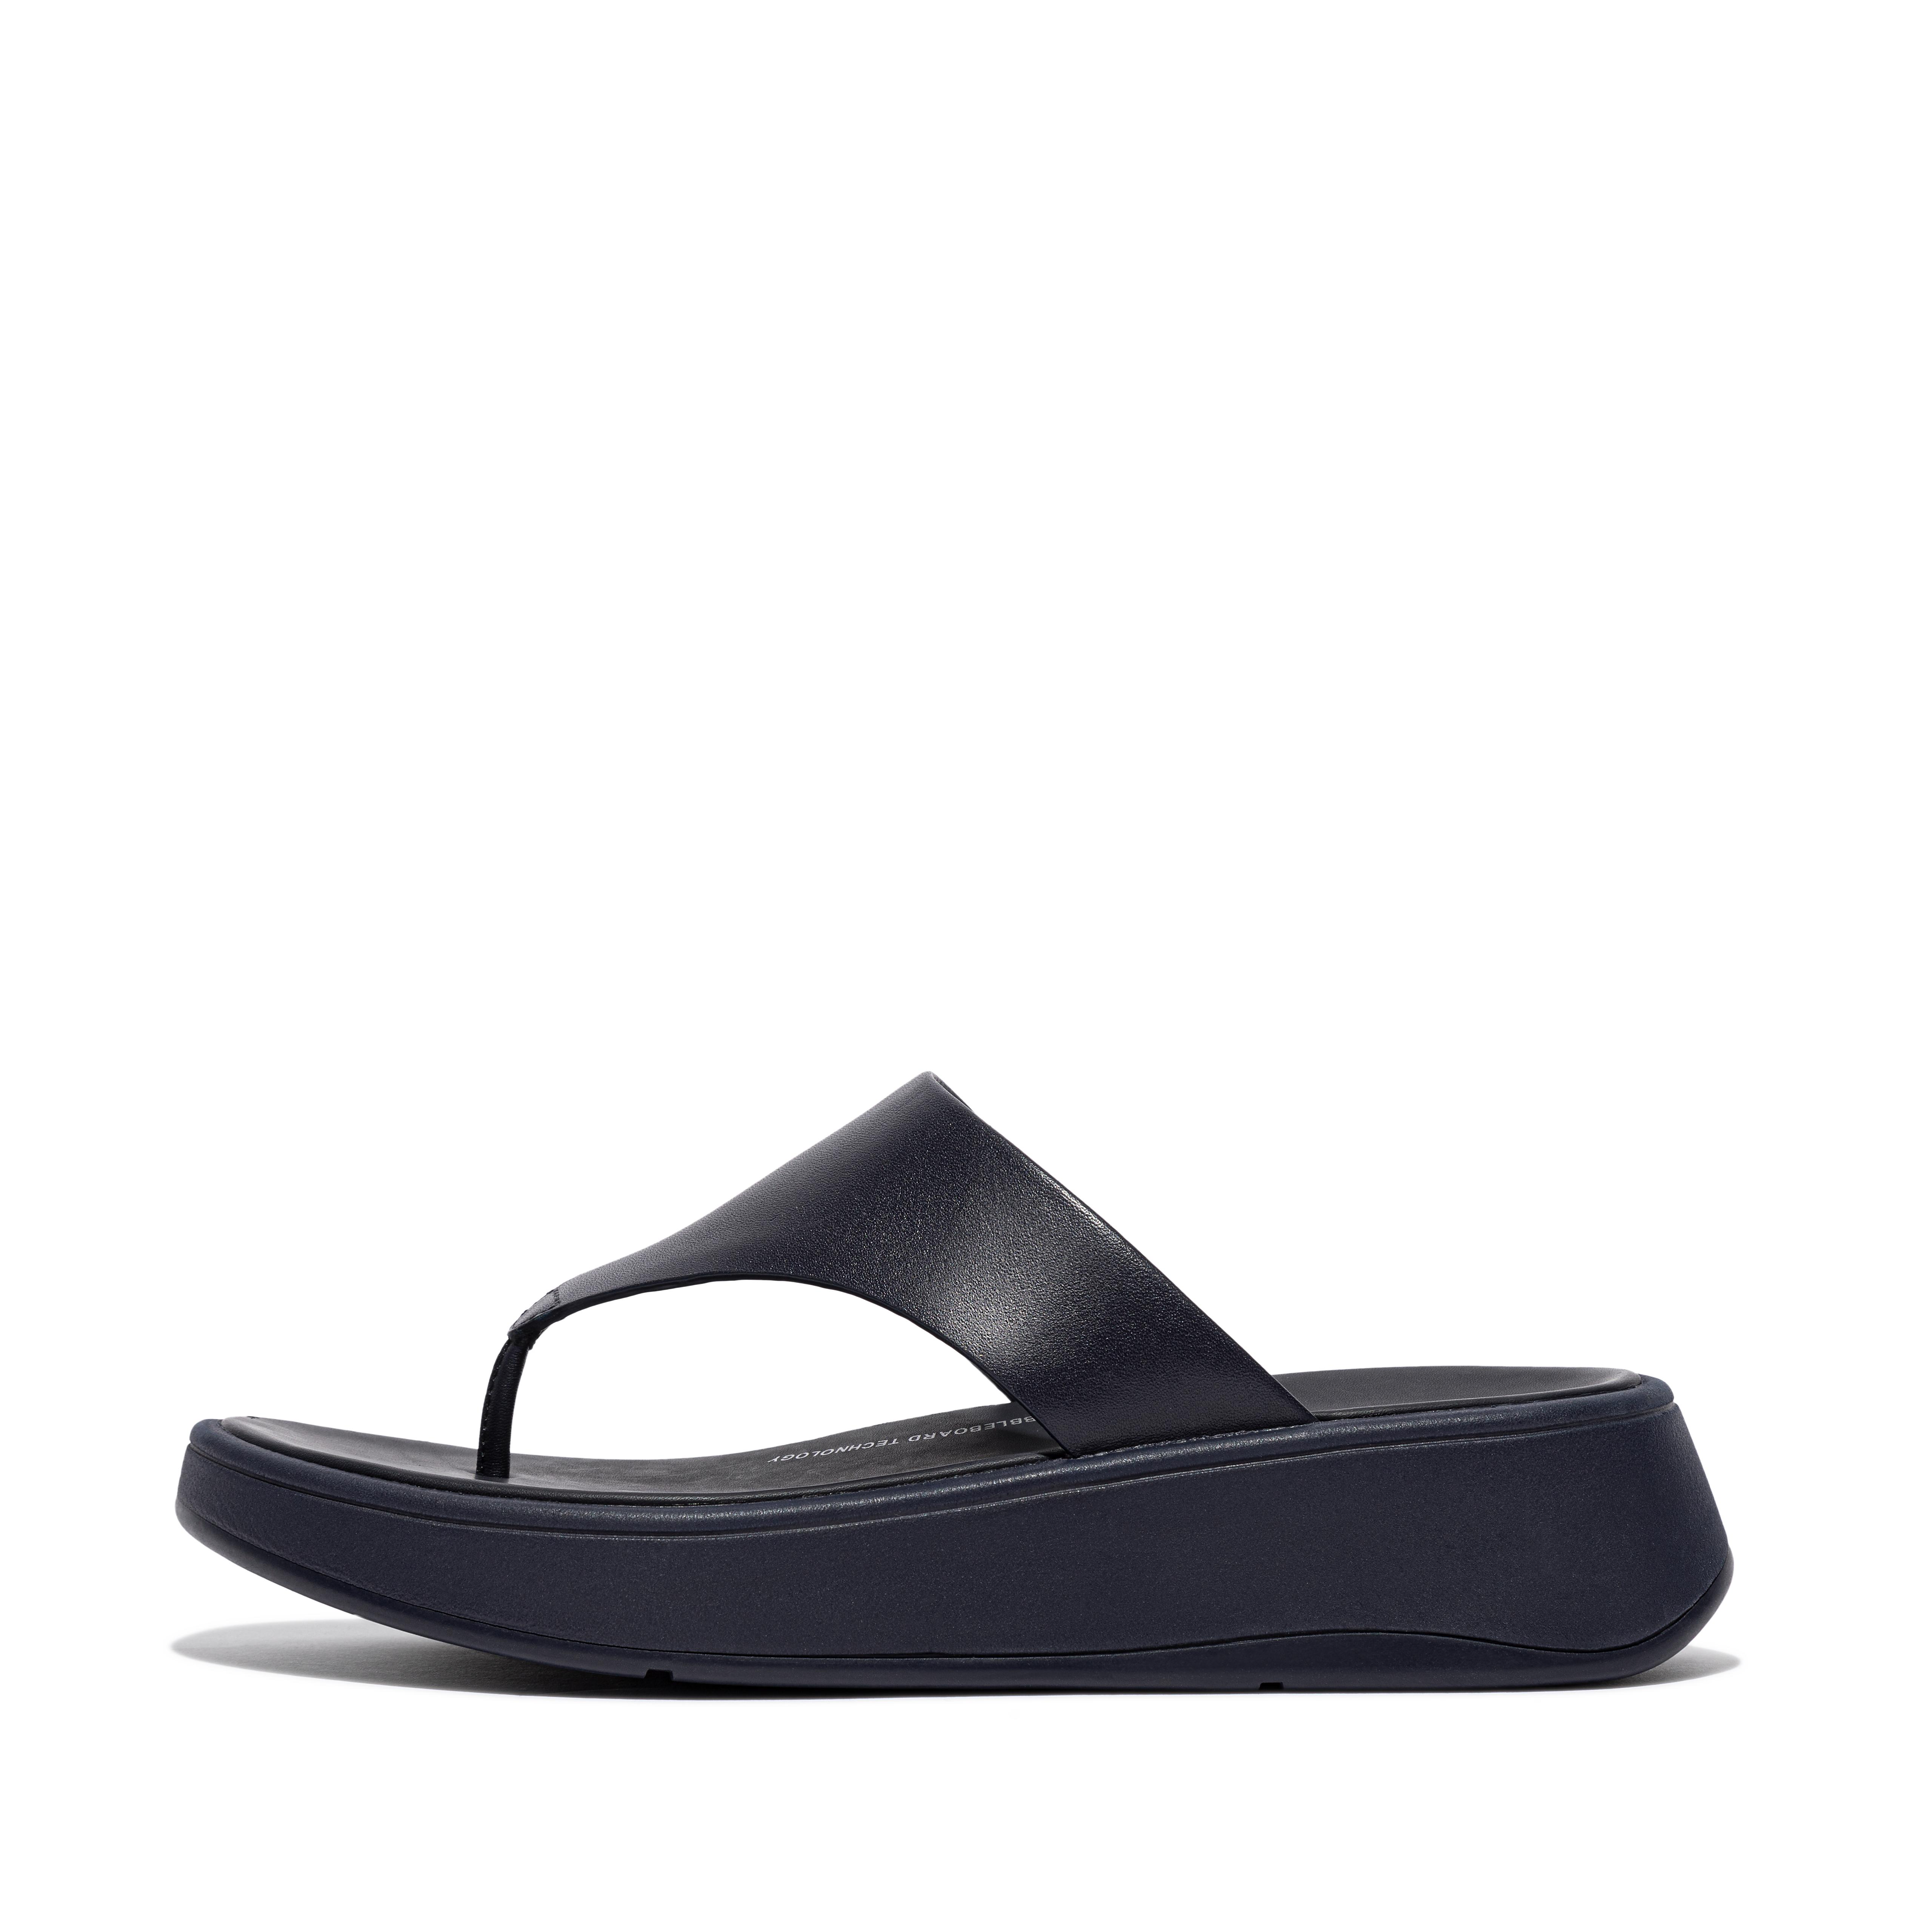 Fitflop Leather Flatform Toe-Post Sandals